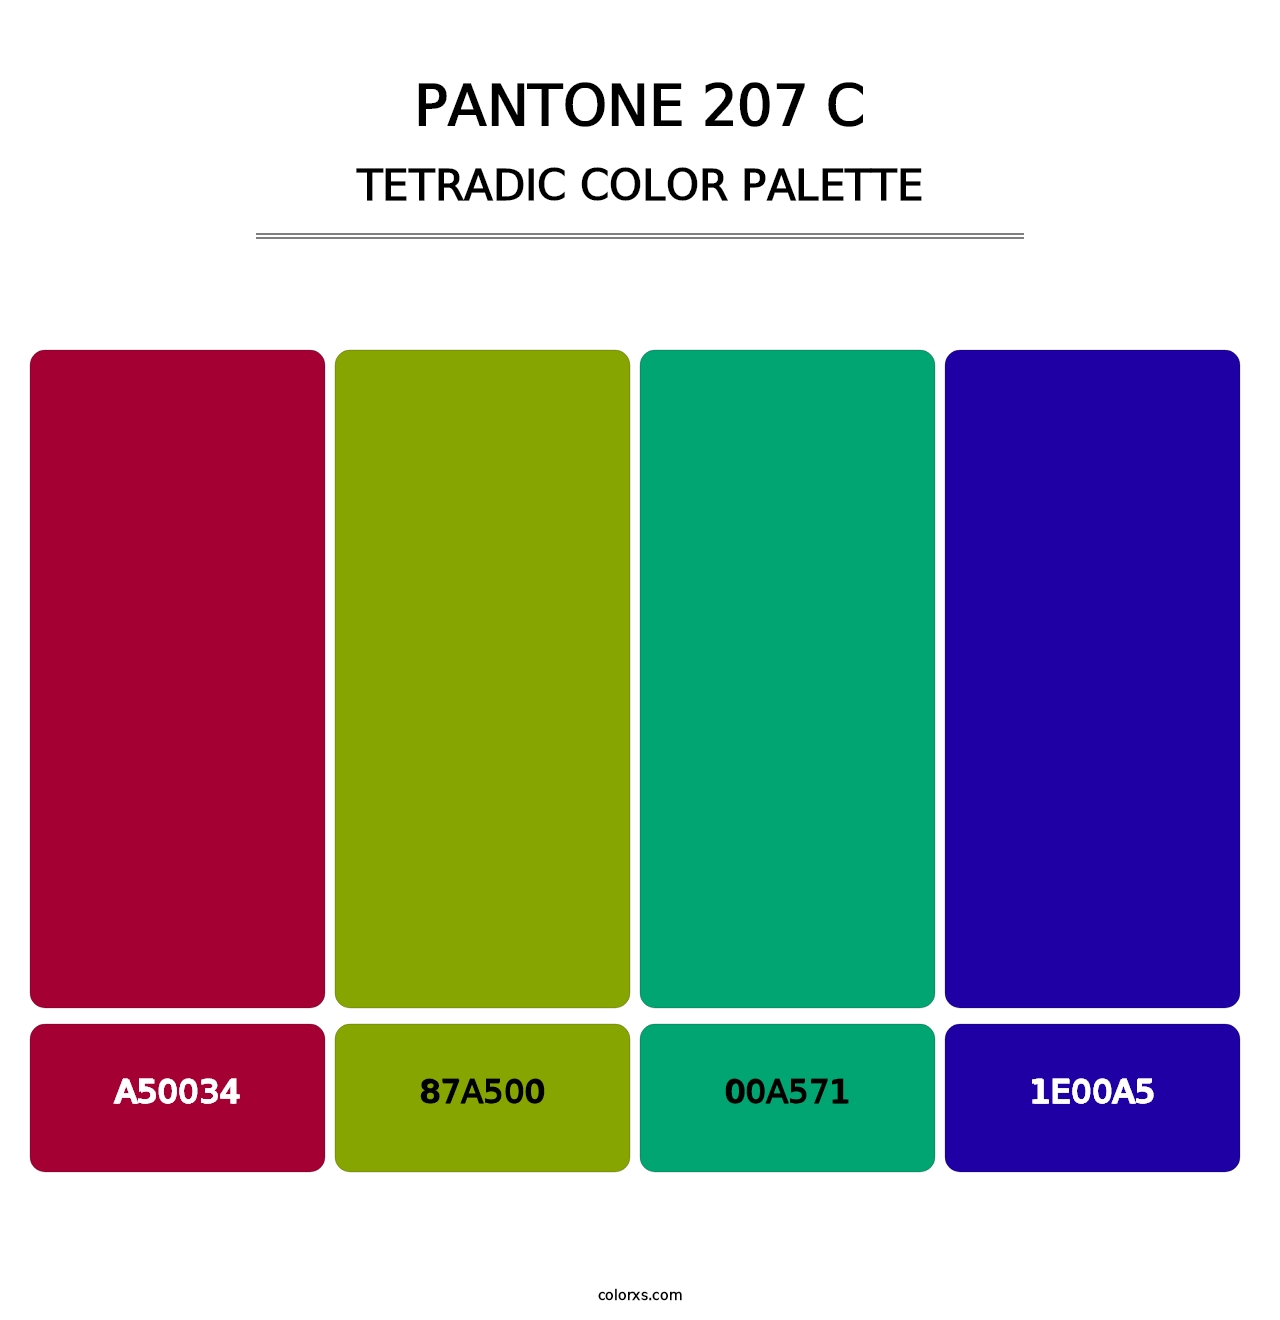 PANTONE 207 C - Tetradic Color Palette